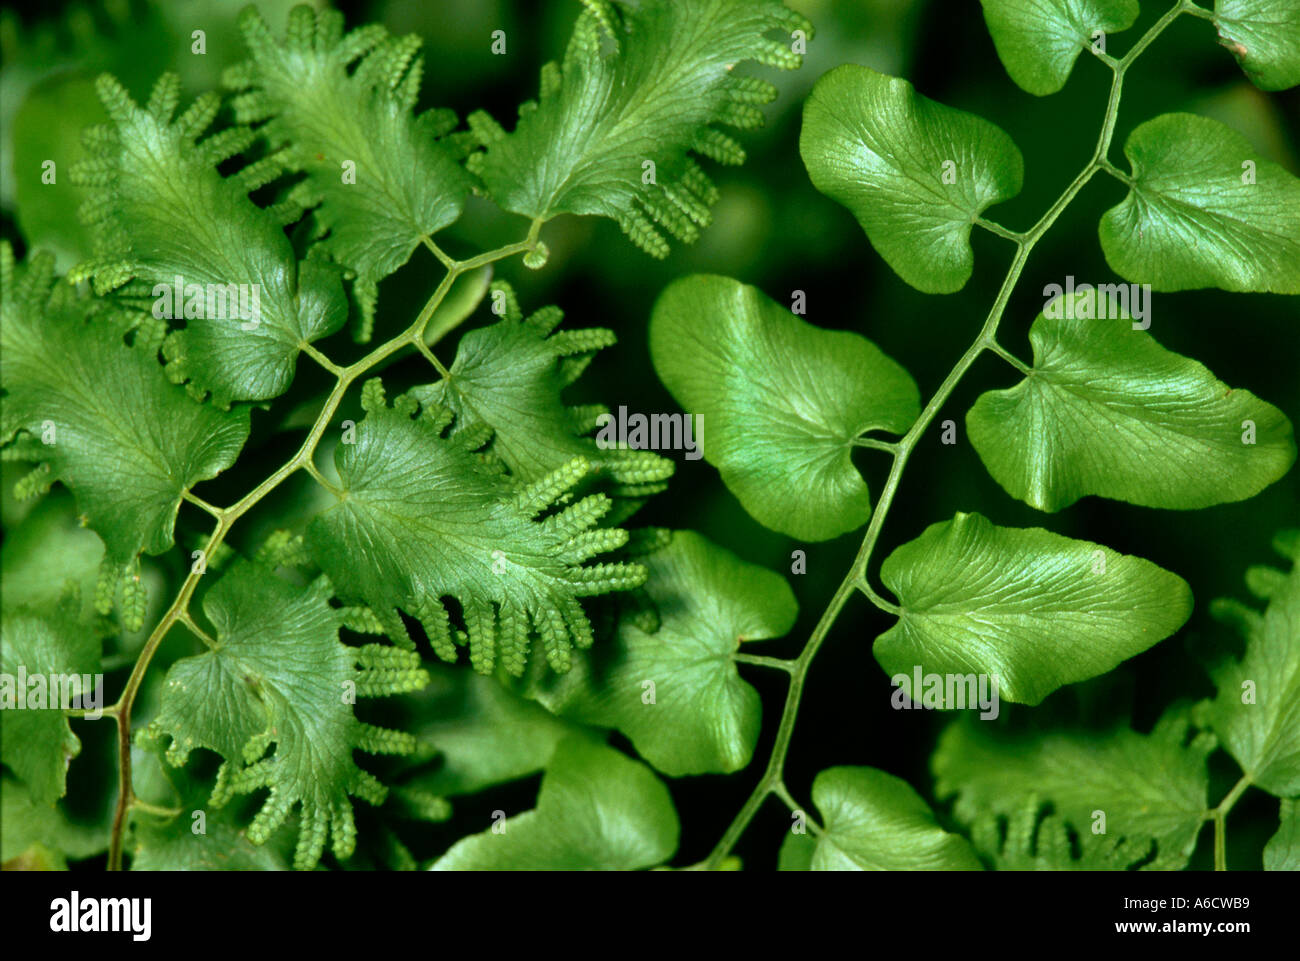 old world climbing fern Lygodium microphyllum fertile non fertile fronds Stock Photo